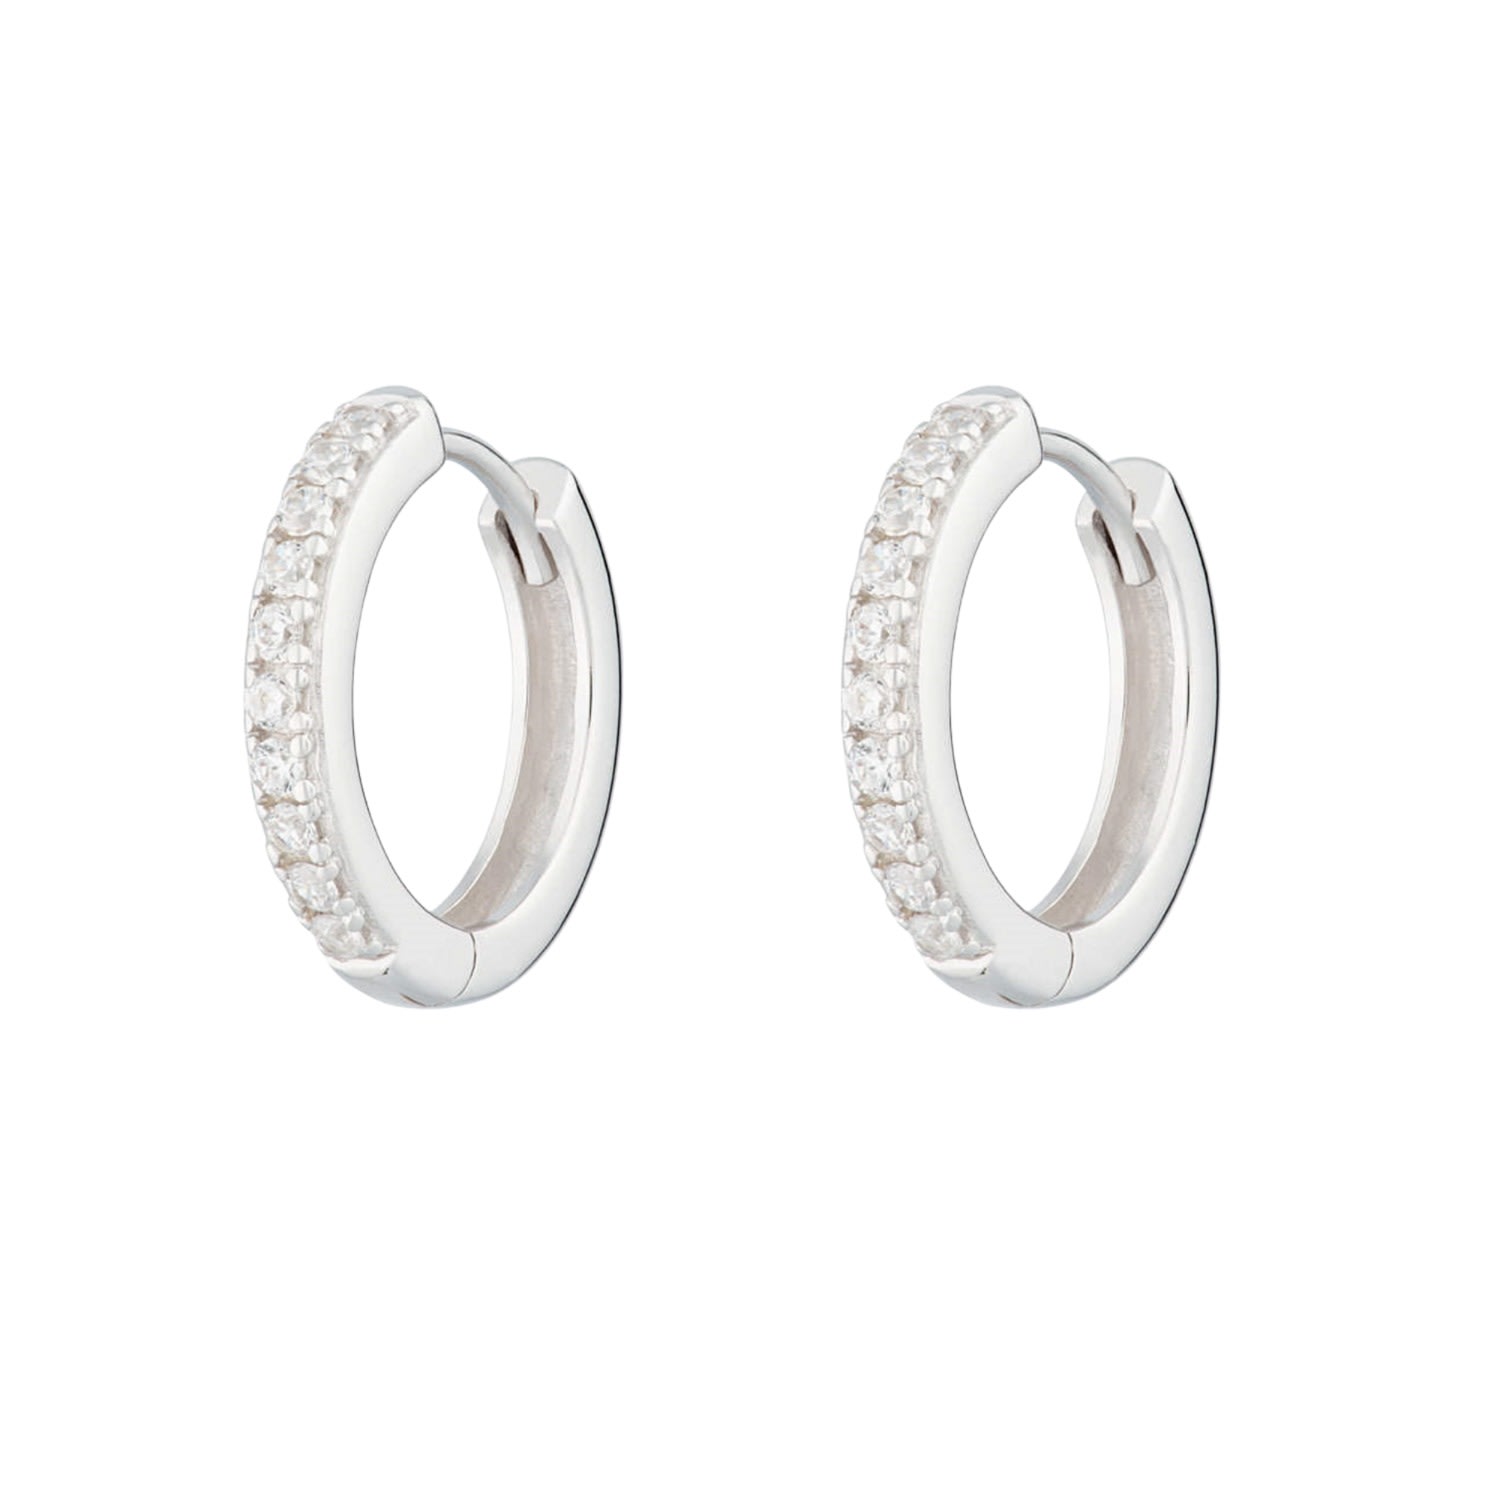 Shop Scream Pretty Women's Silver Large Huggie Earrings With Clear Stones